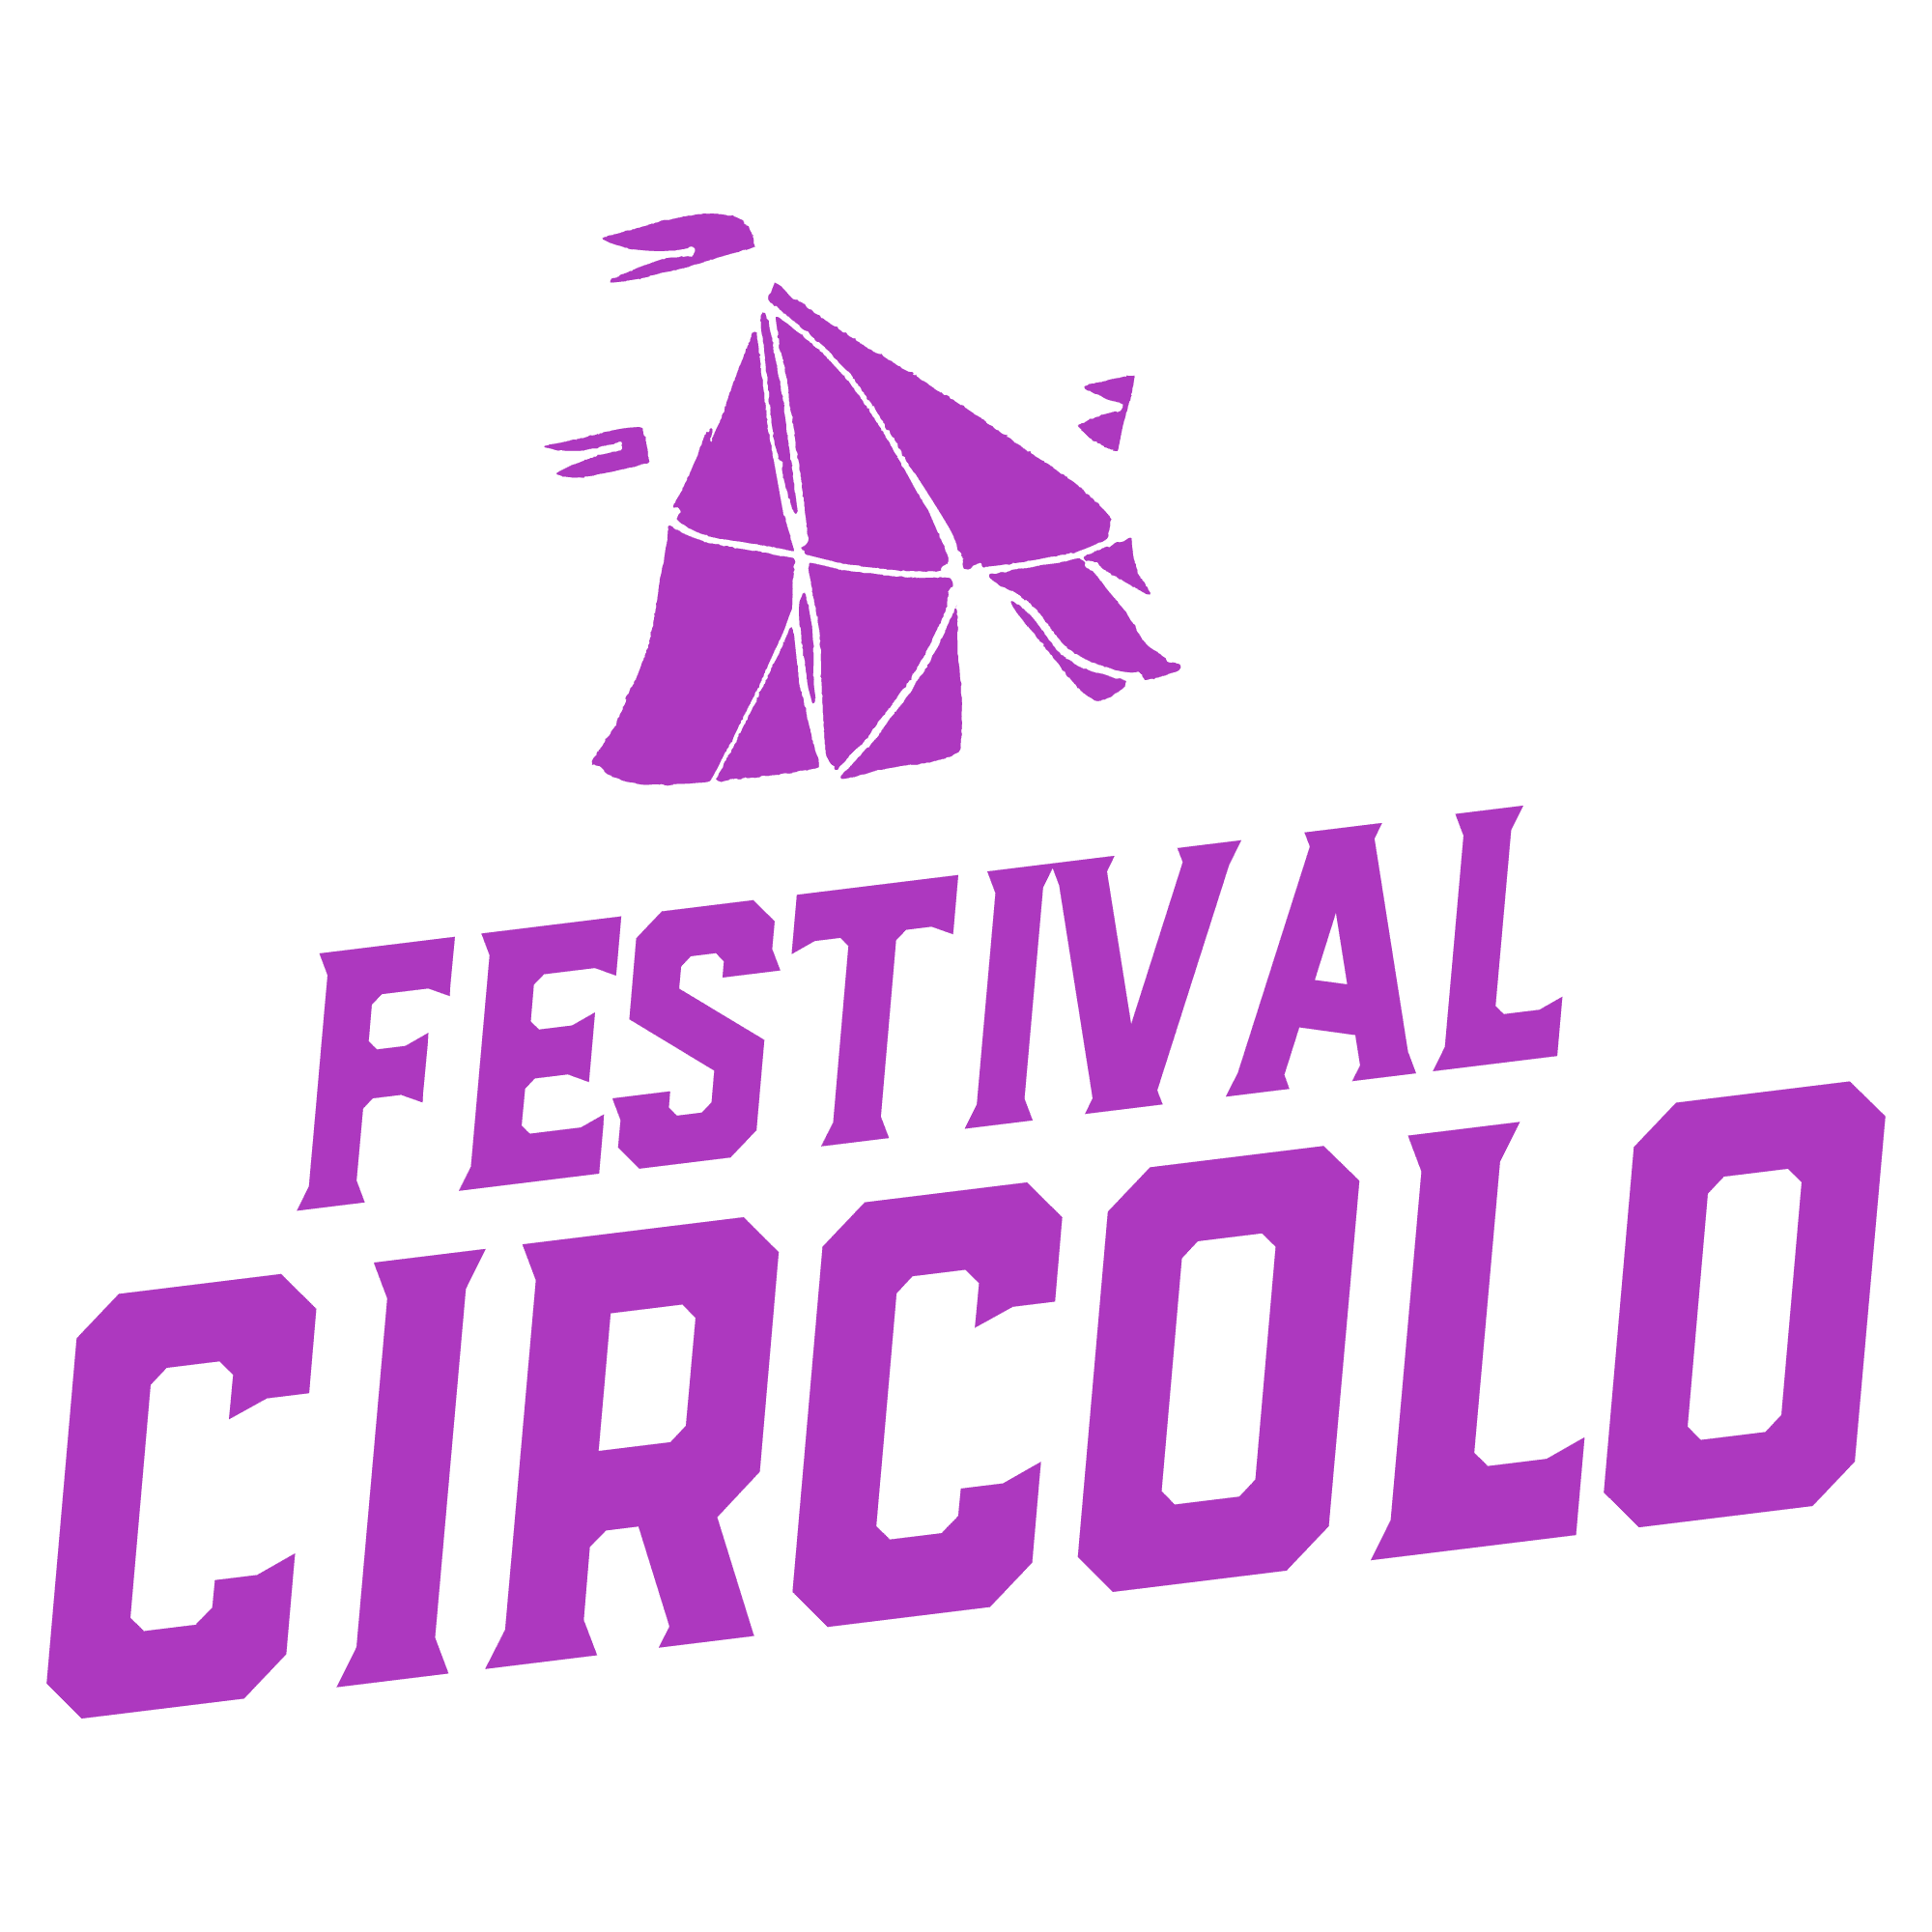 Platform members circusnext - European Circus Label